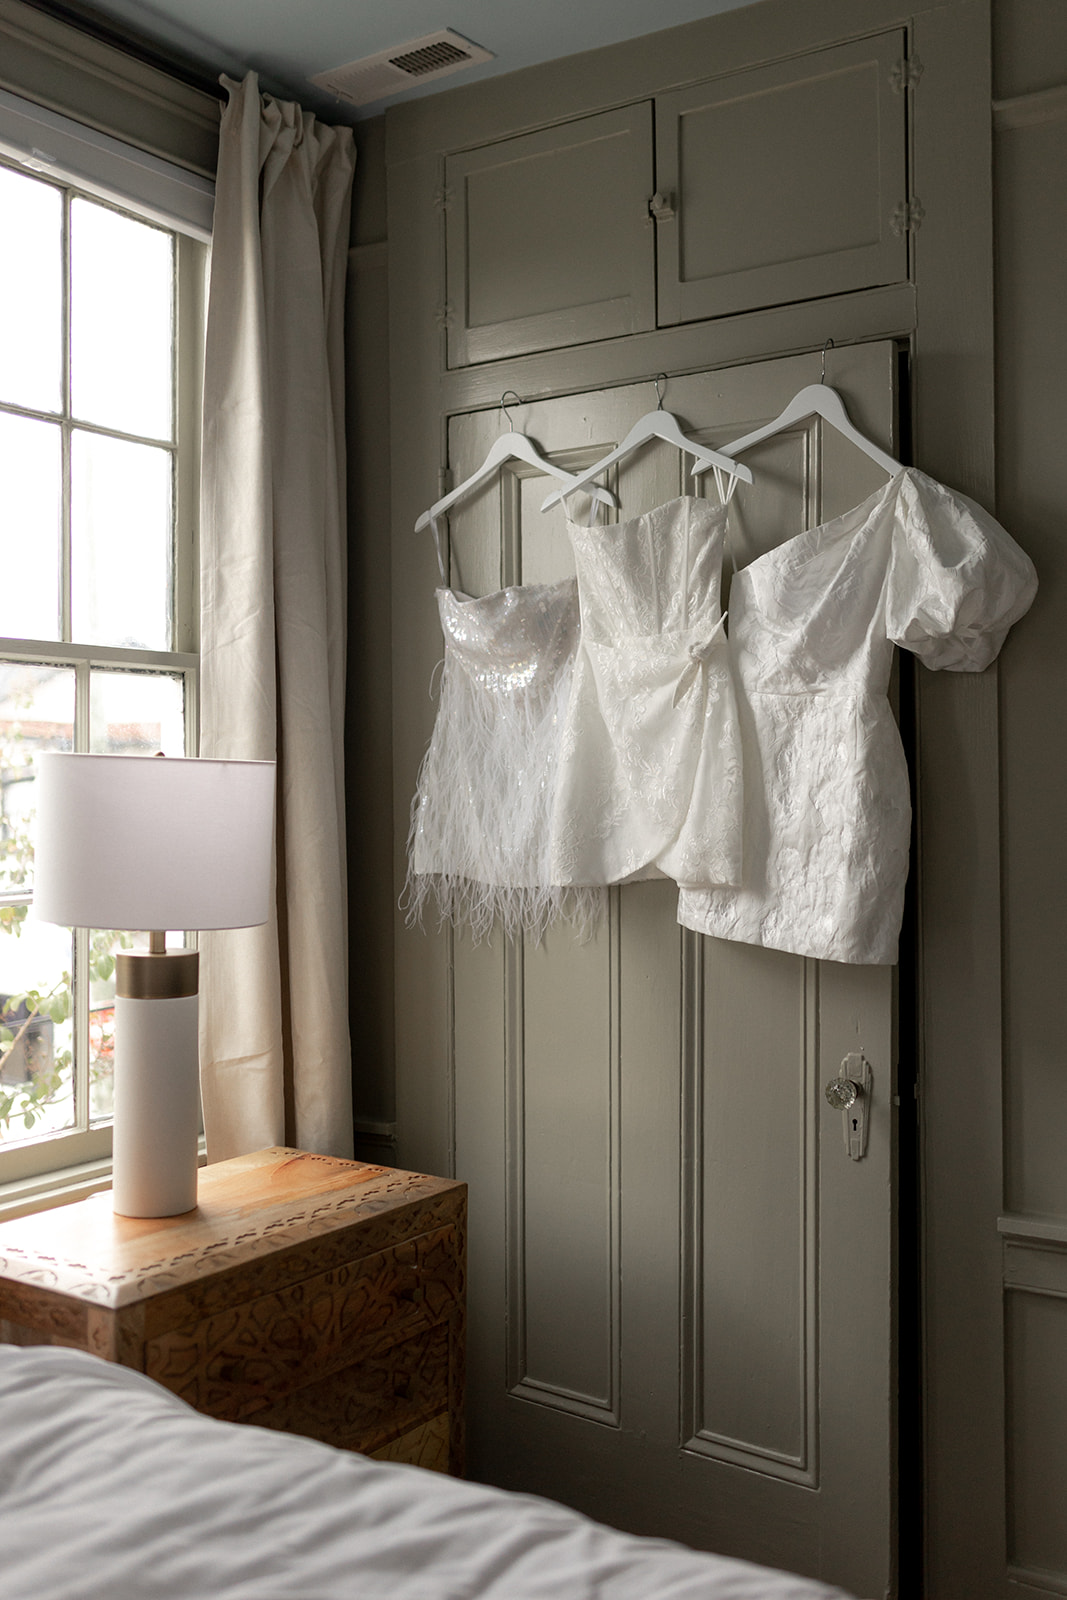 Bridal dresses hanging next to window